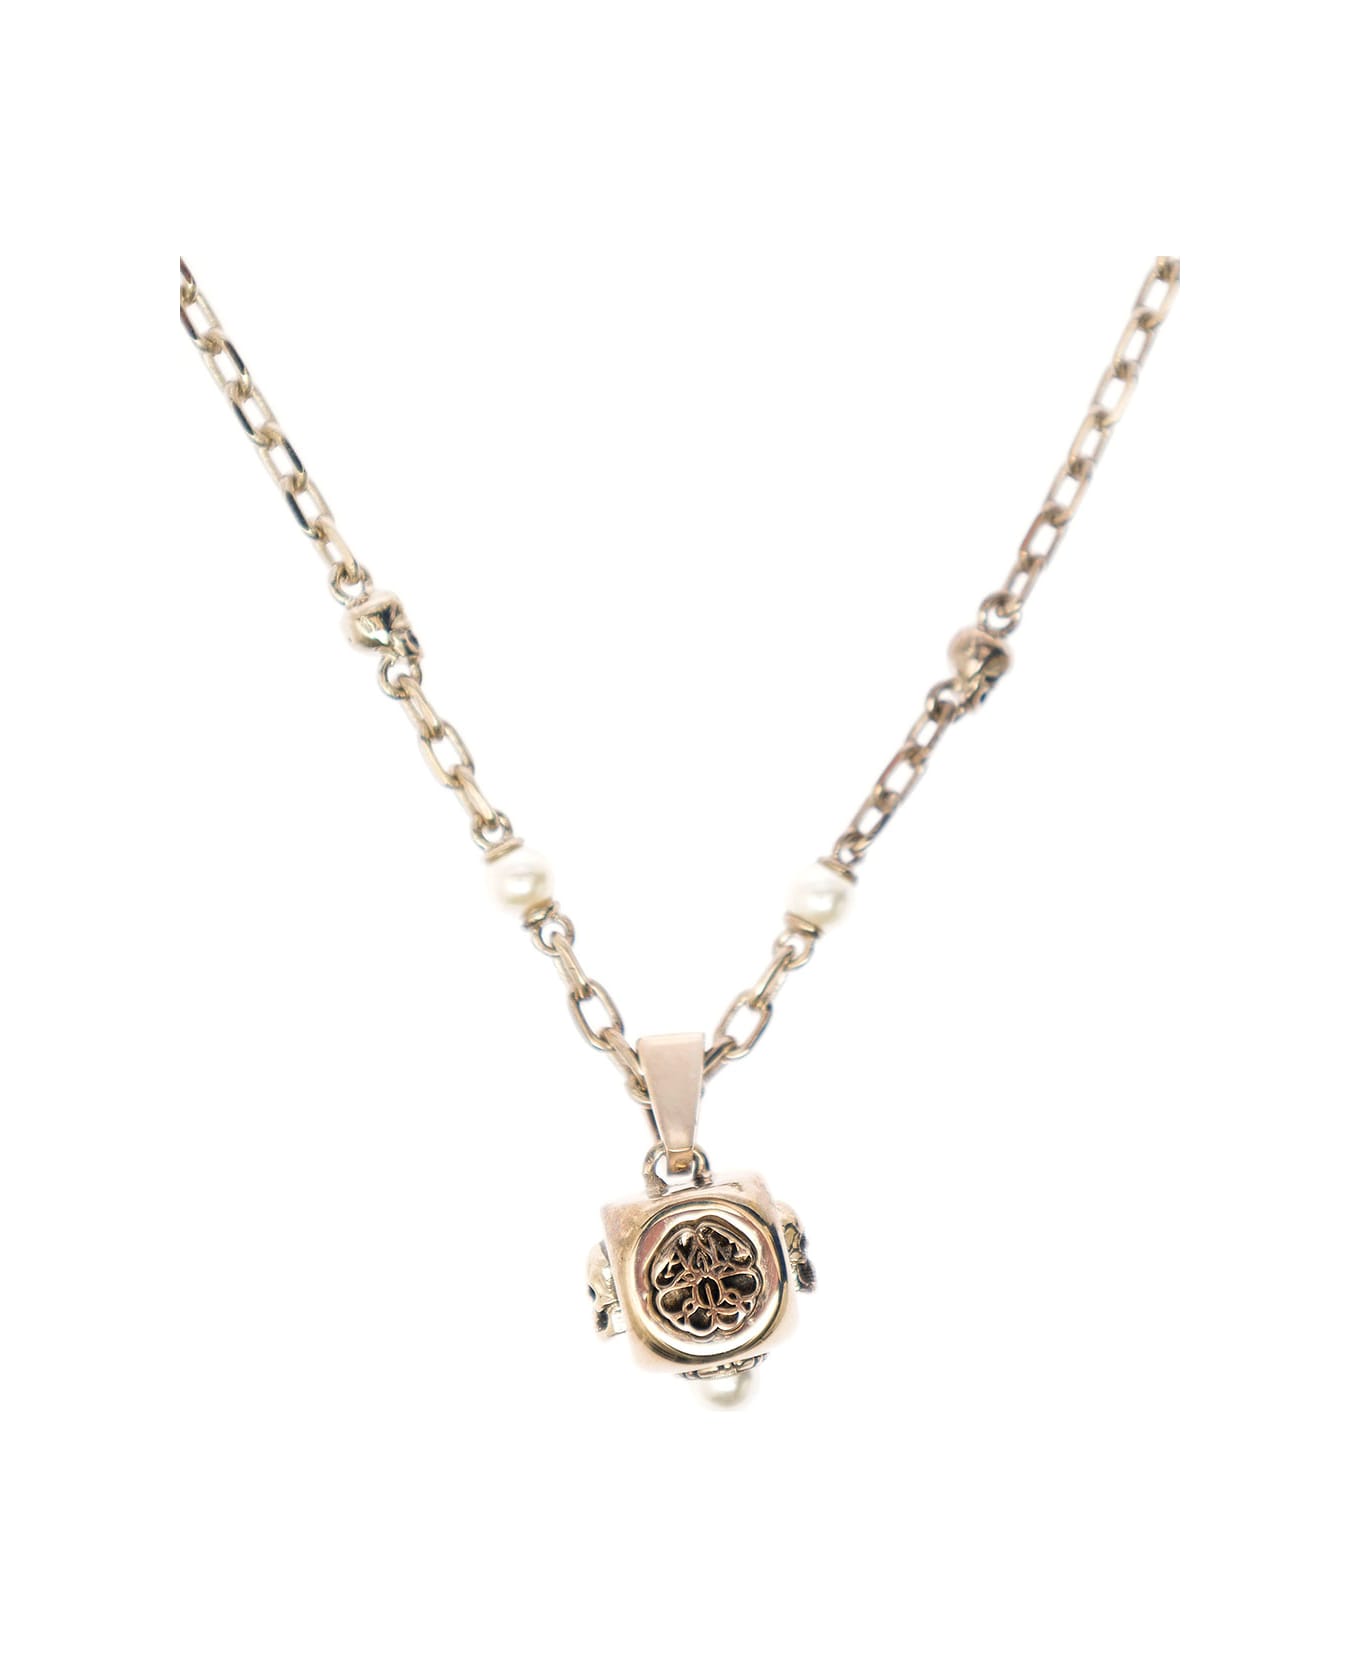 Alexander McQueen Woman's Brass Necklace With Logo Pendant - Metallic